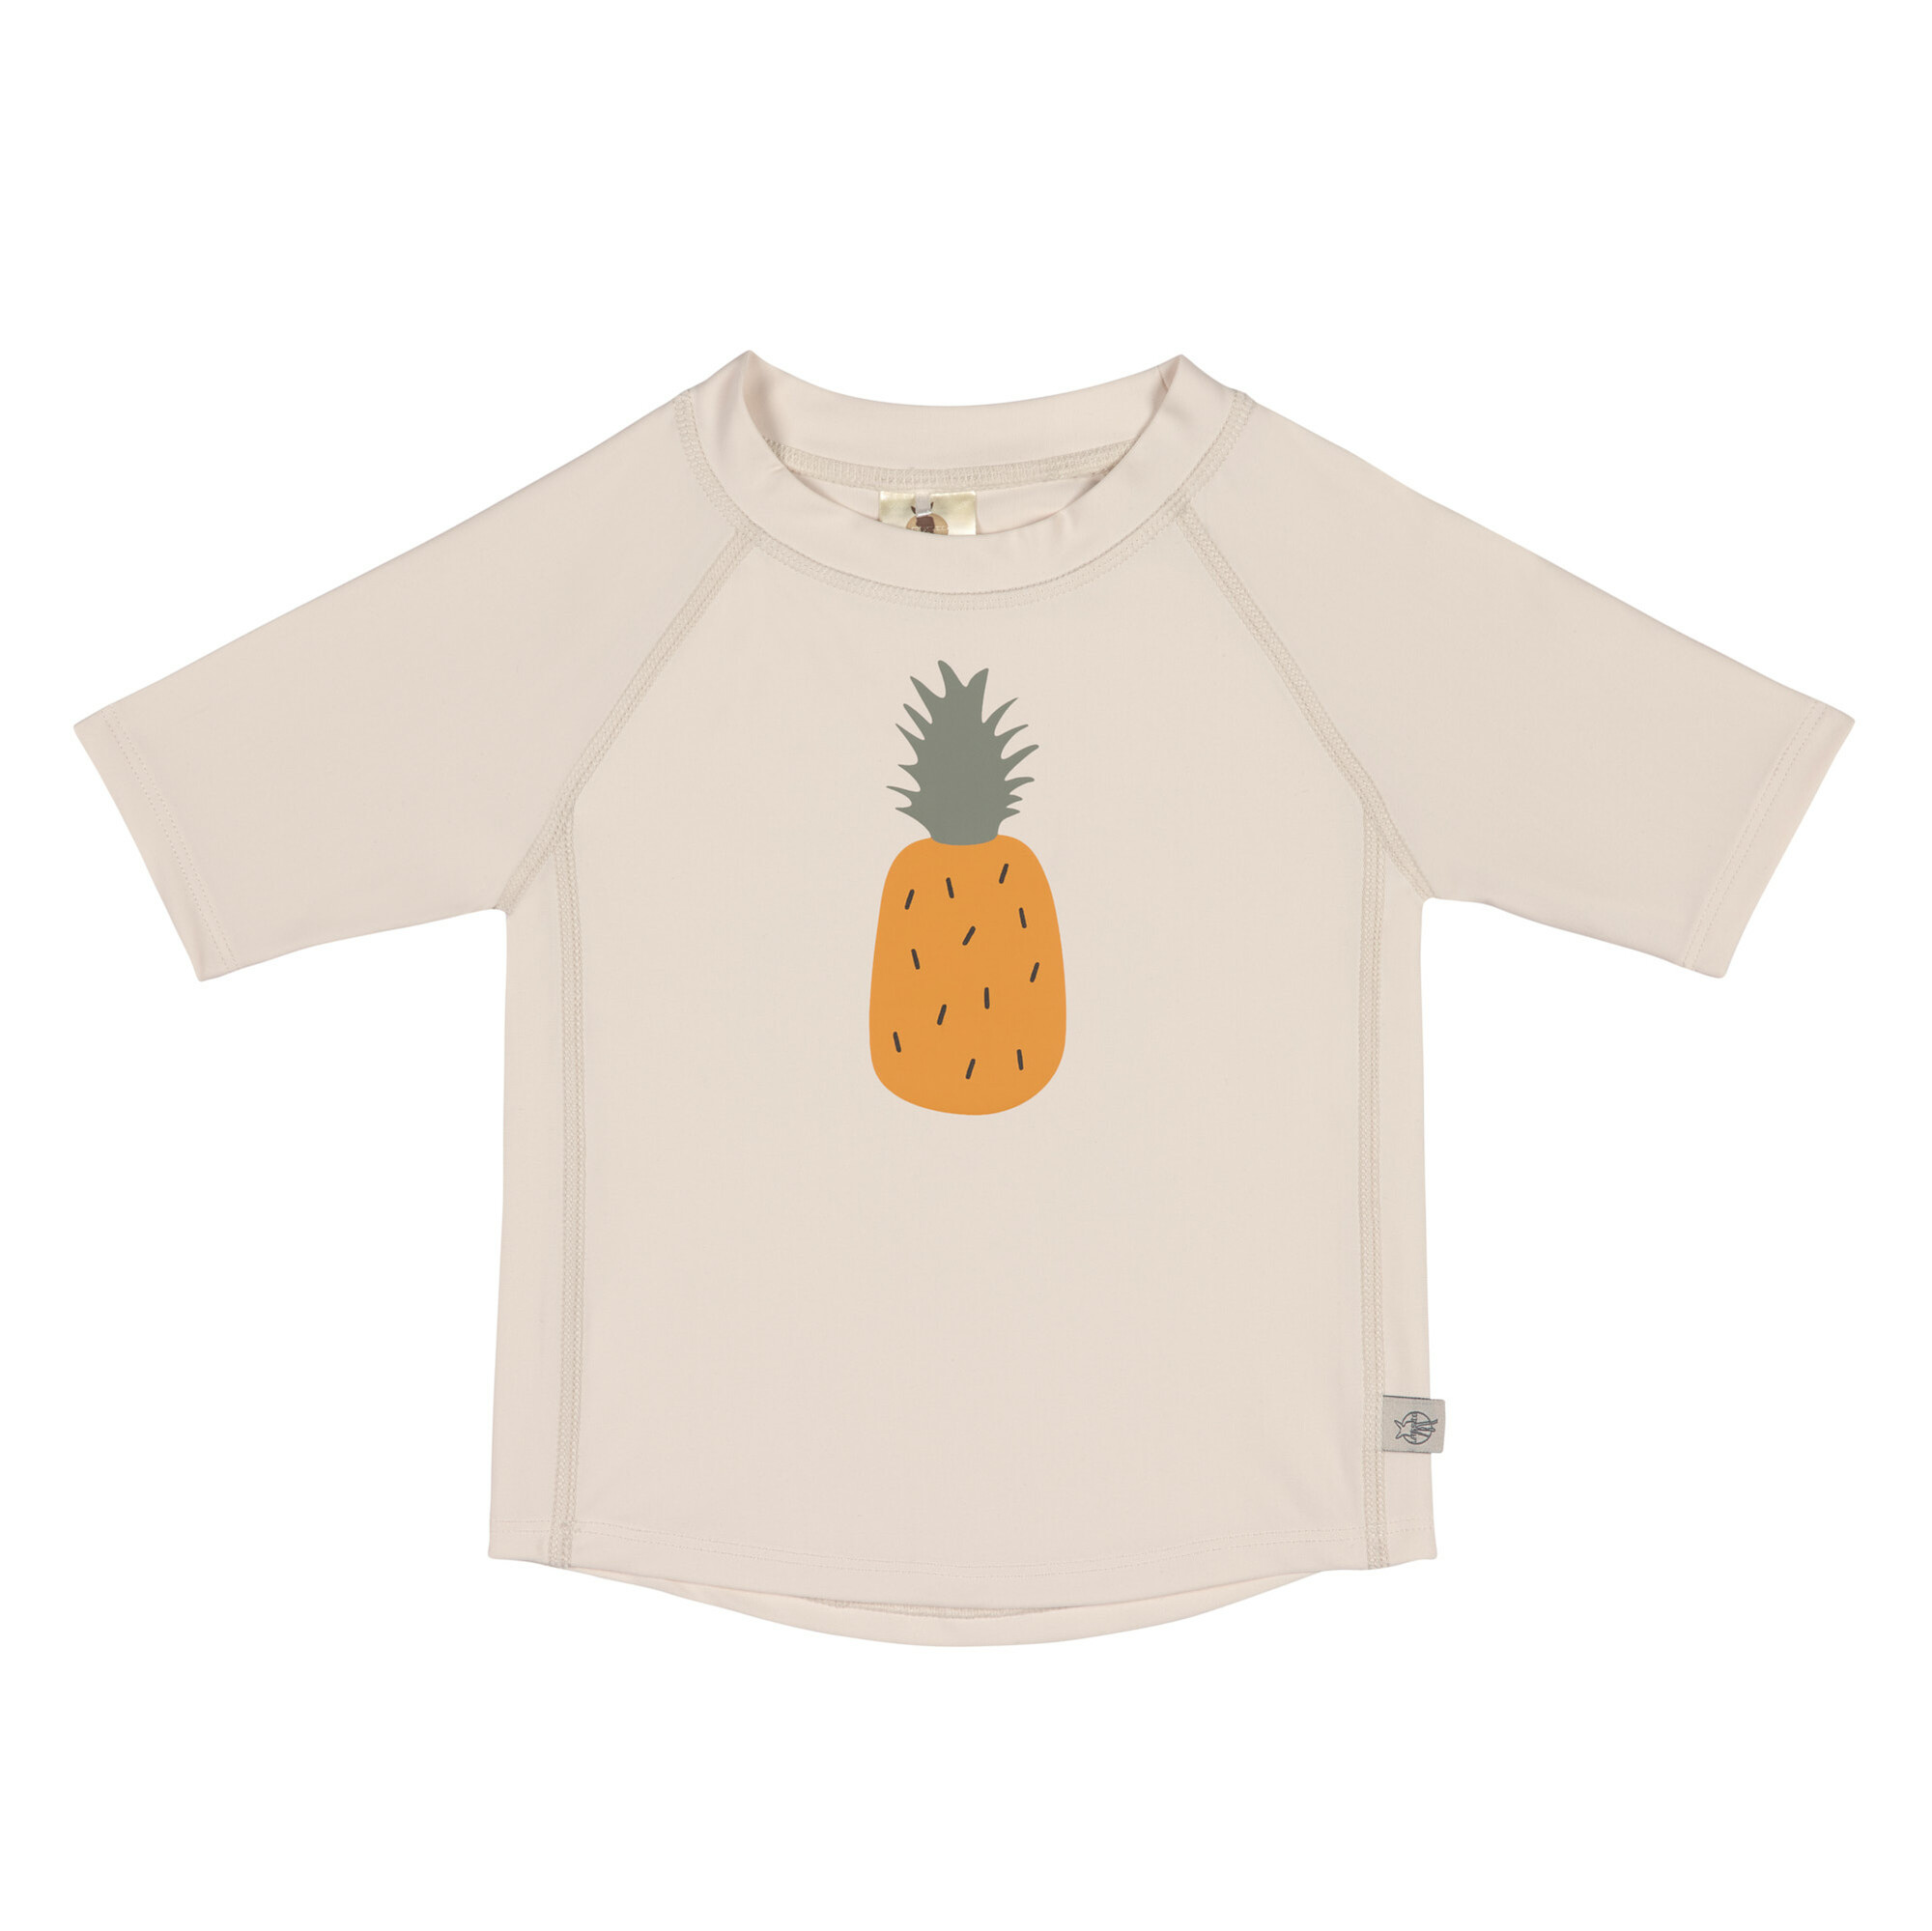 Lässig - UV rashguard with short sleeves for kids - Pineapple - Offwhite